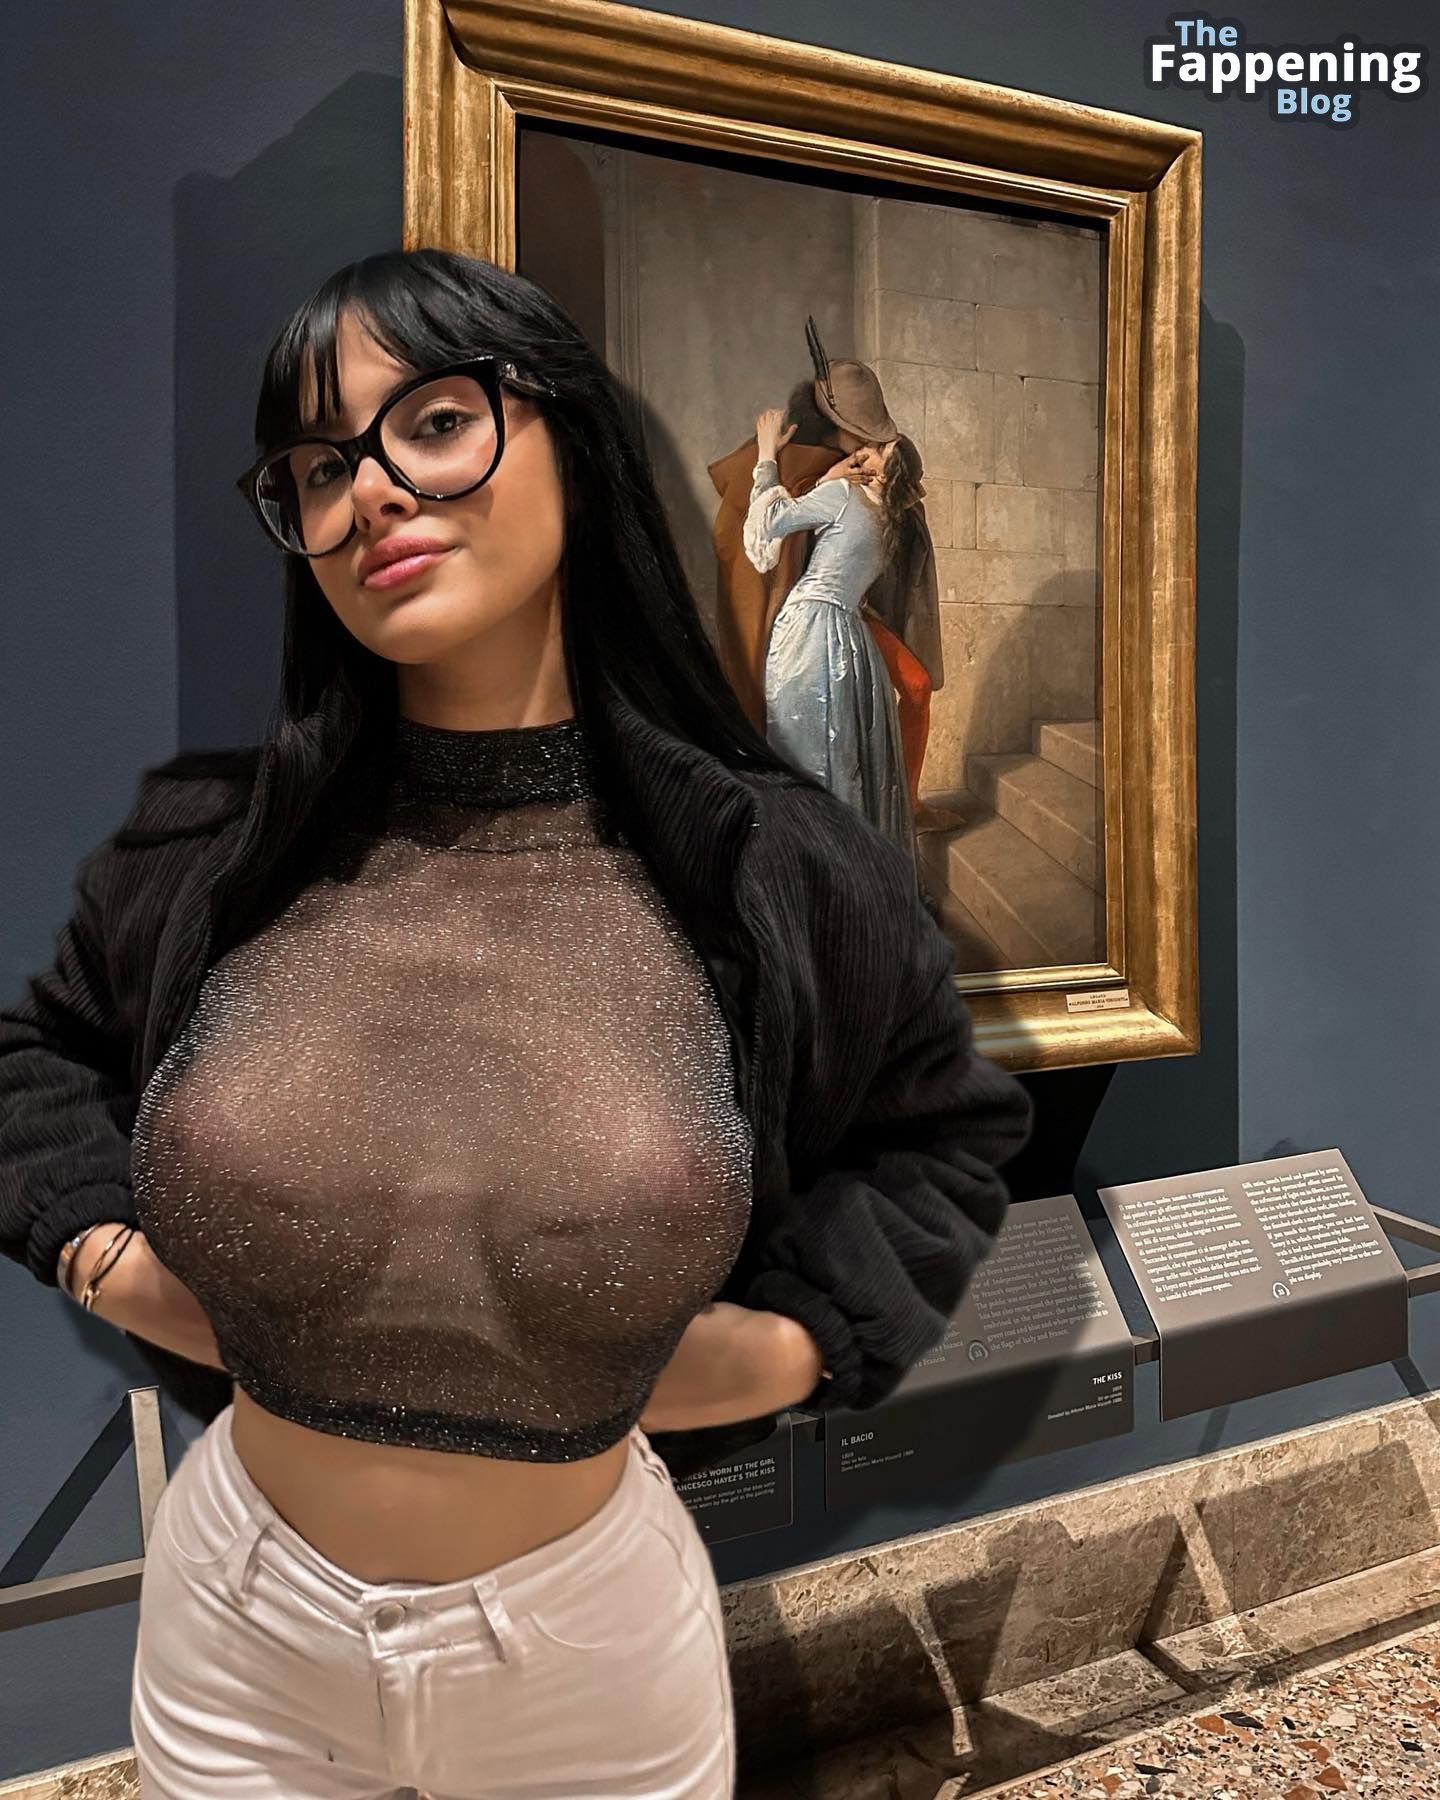 Vismara Martina Shows Off Her Nude Boobs (18 Photos)